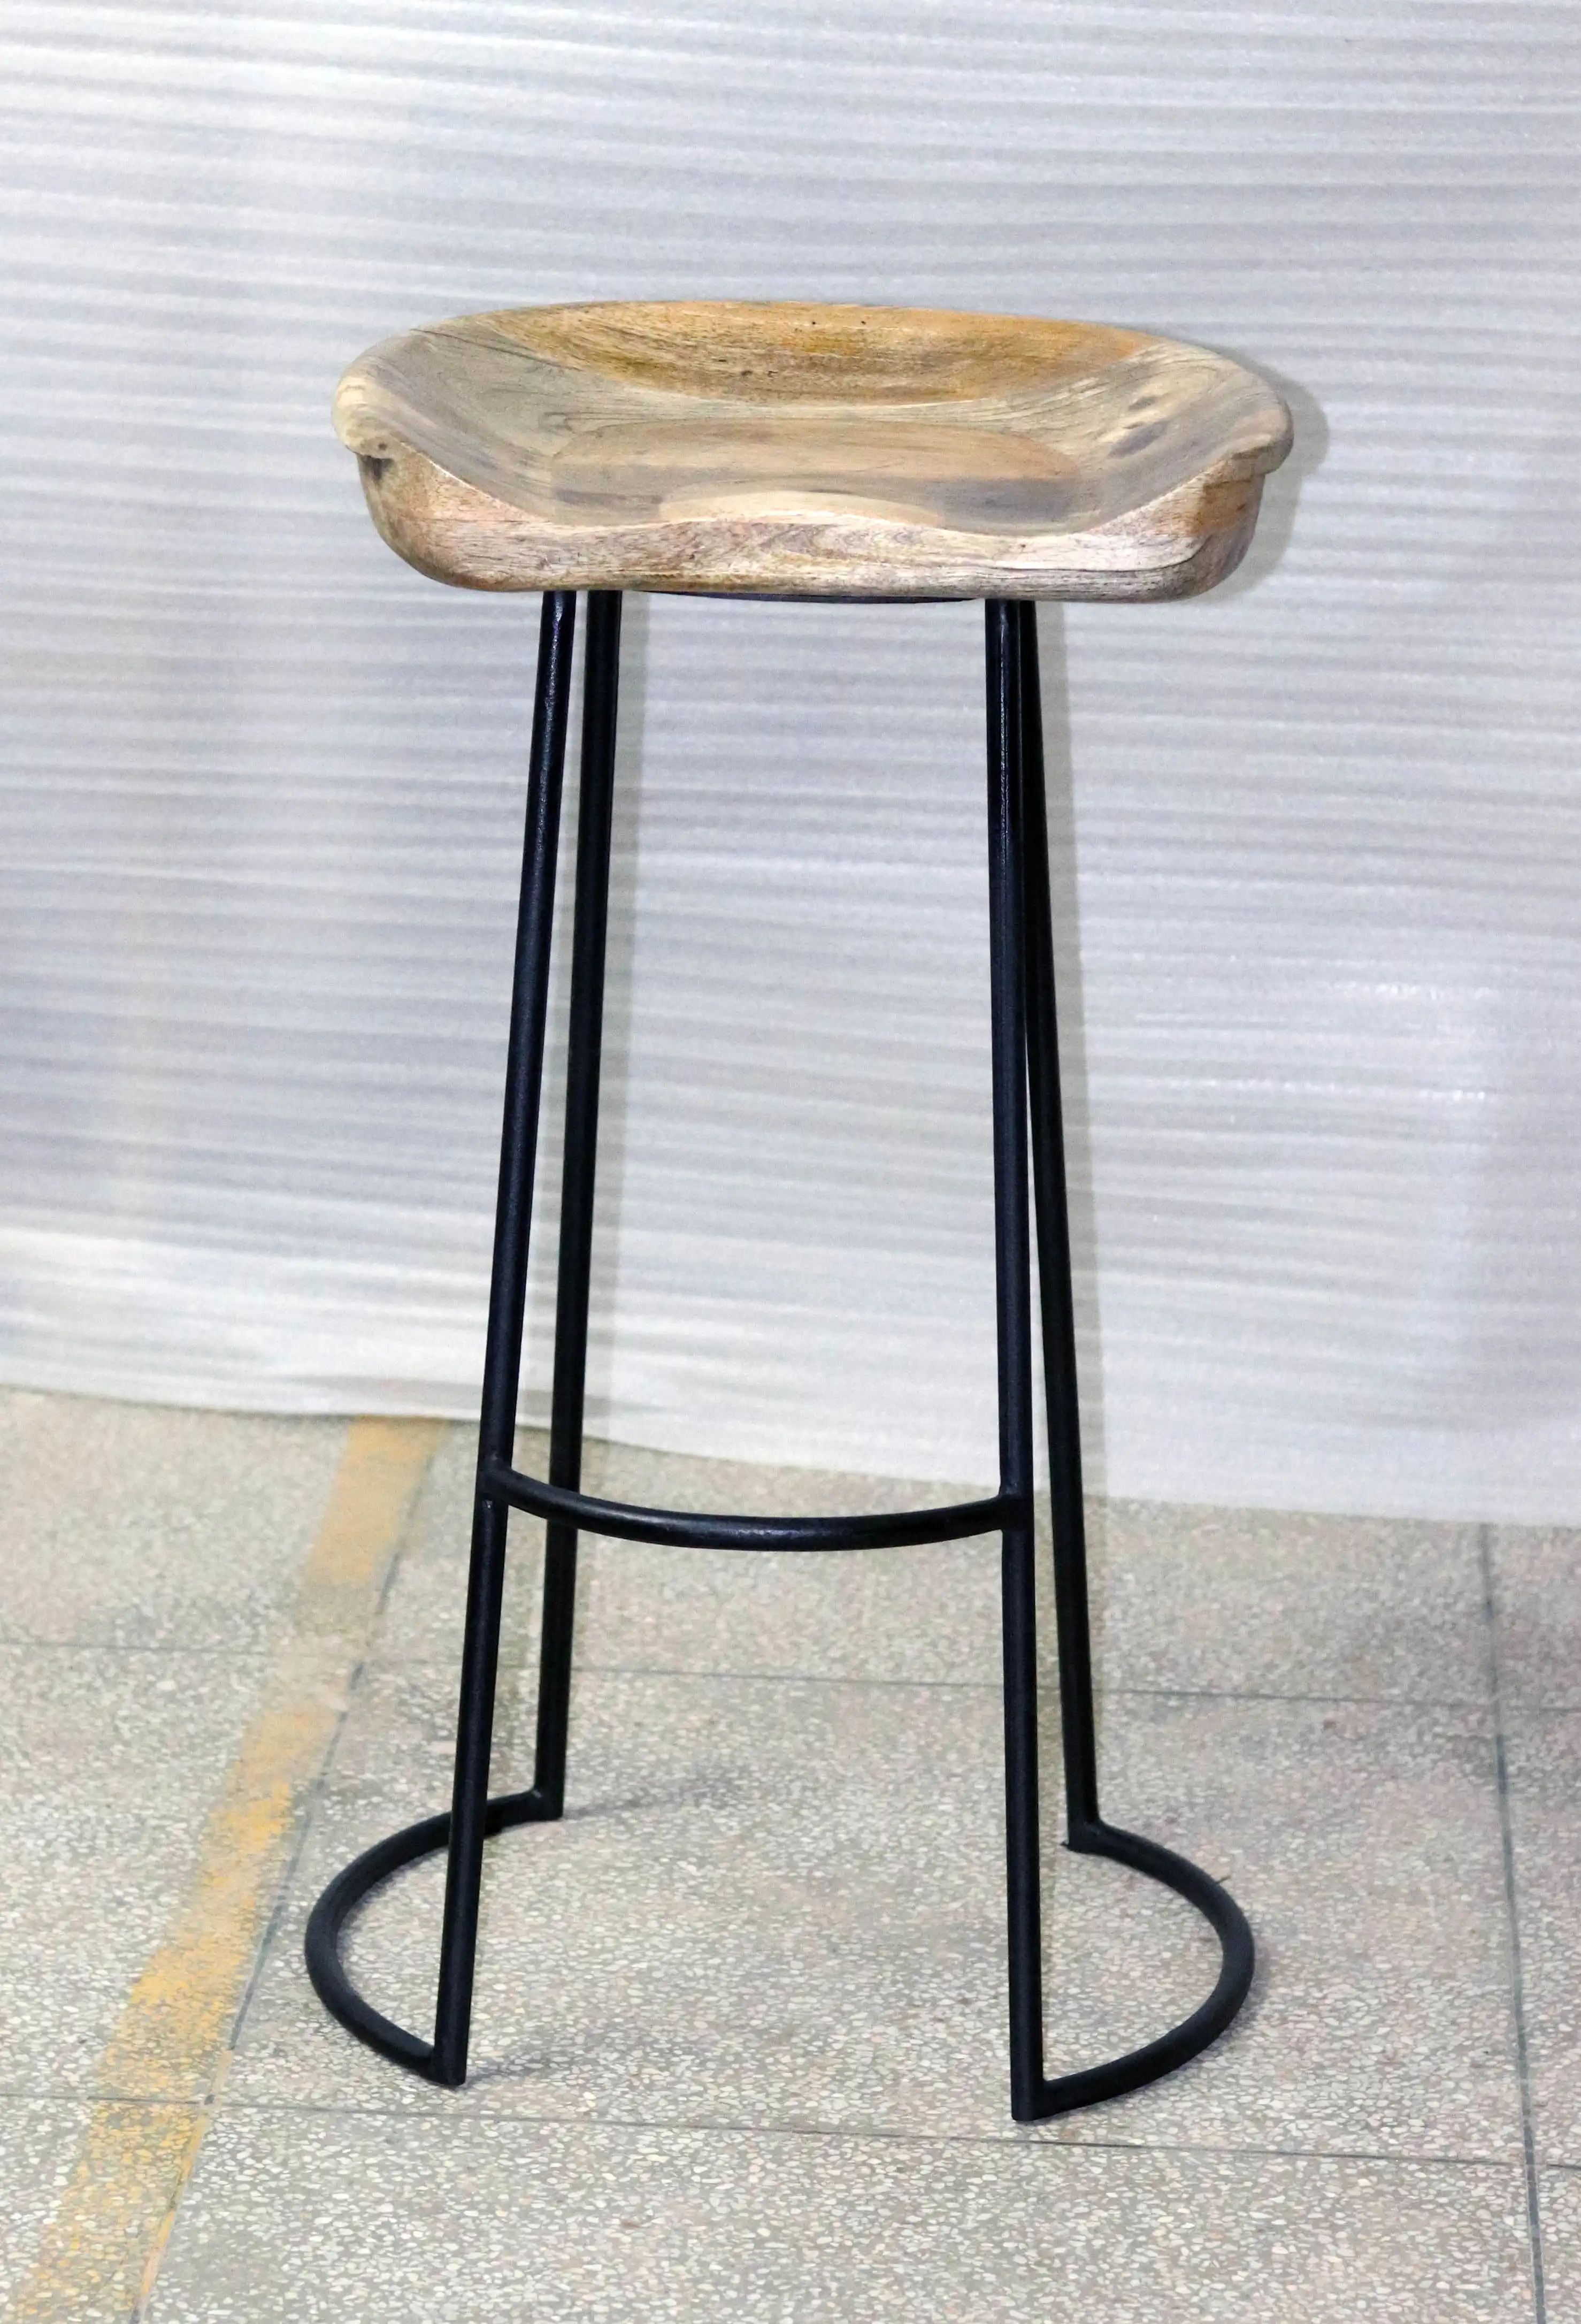 Iron Bar Stool with Wooden Seat - popular handicrafts